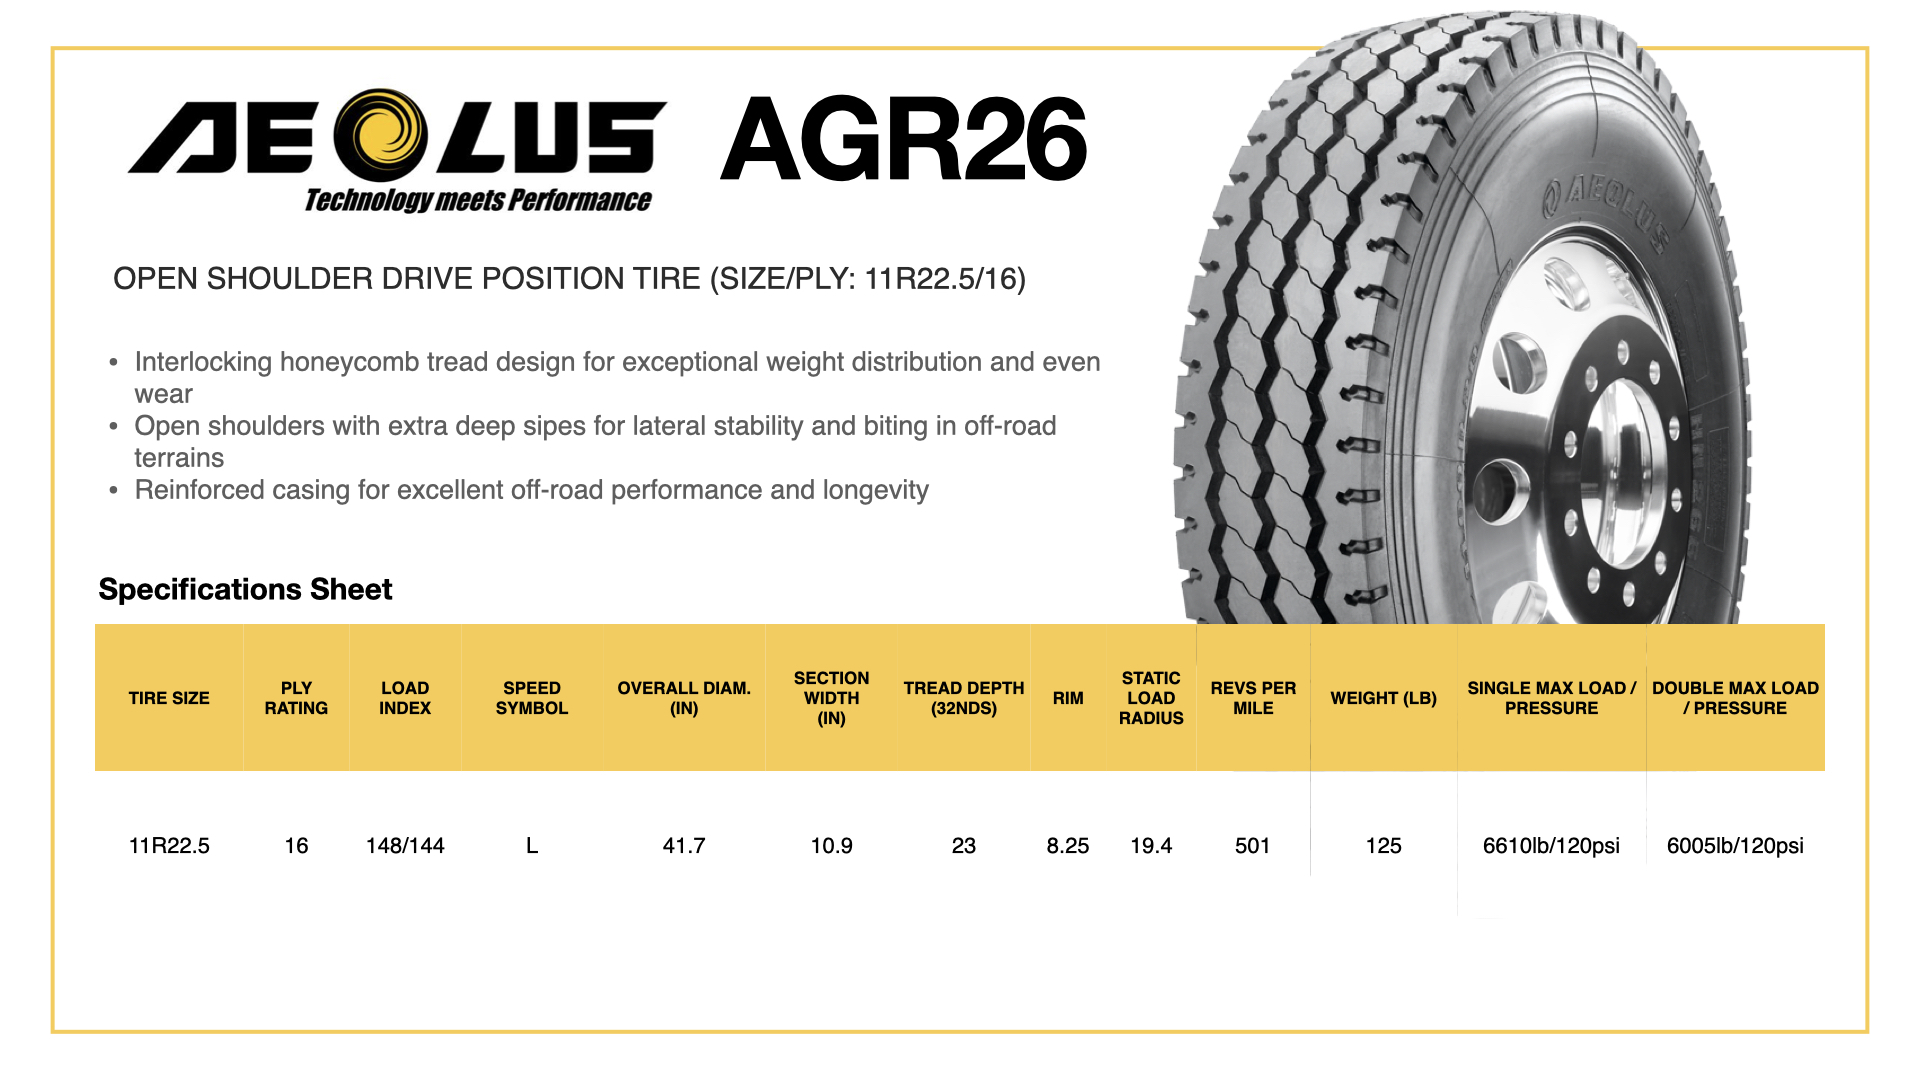 Aeolus AGR26 11R22.5 Specifications Sheet